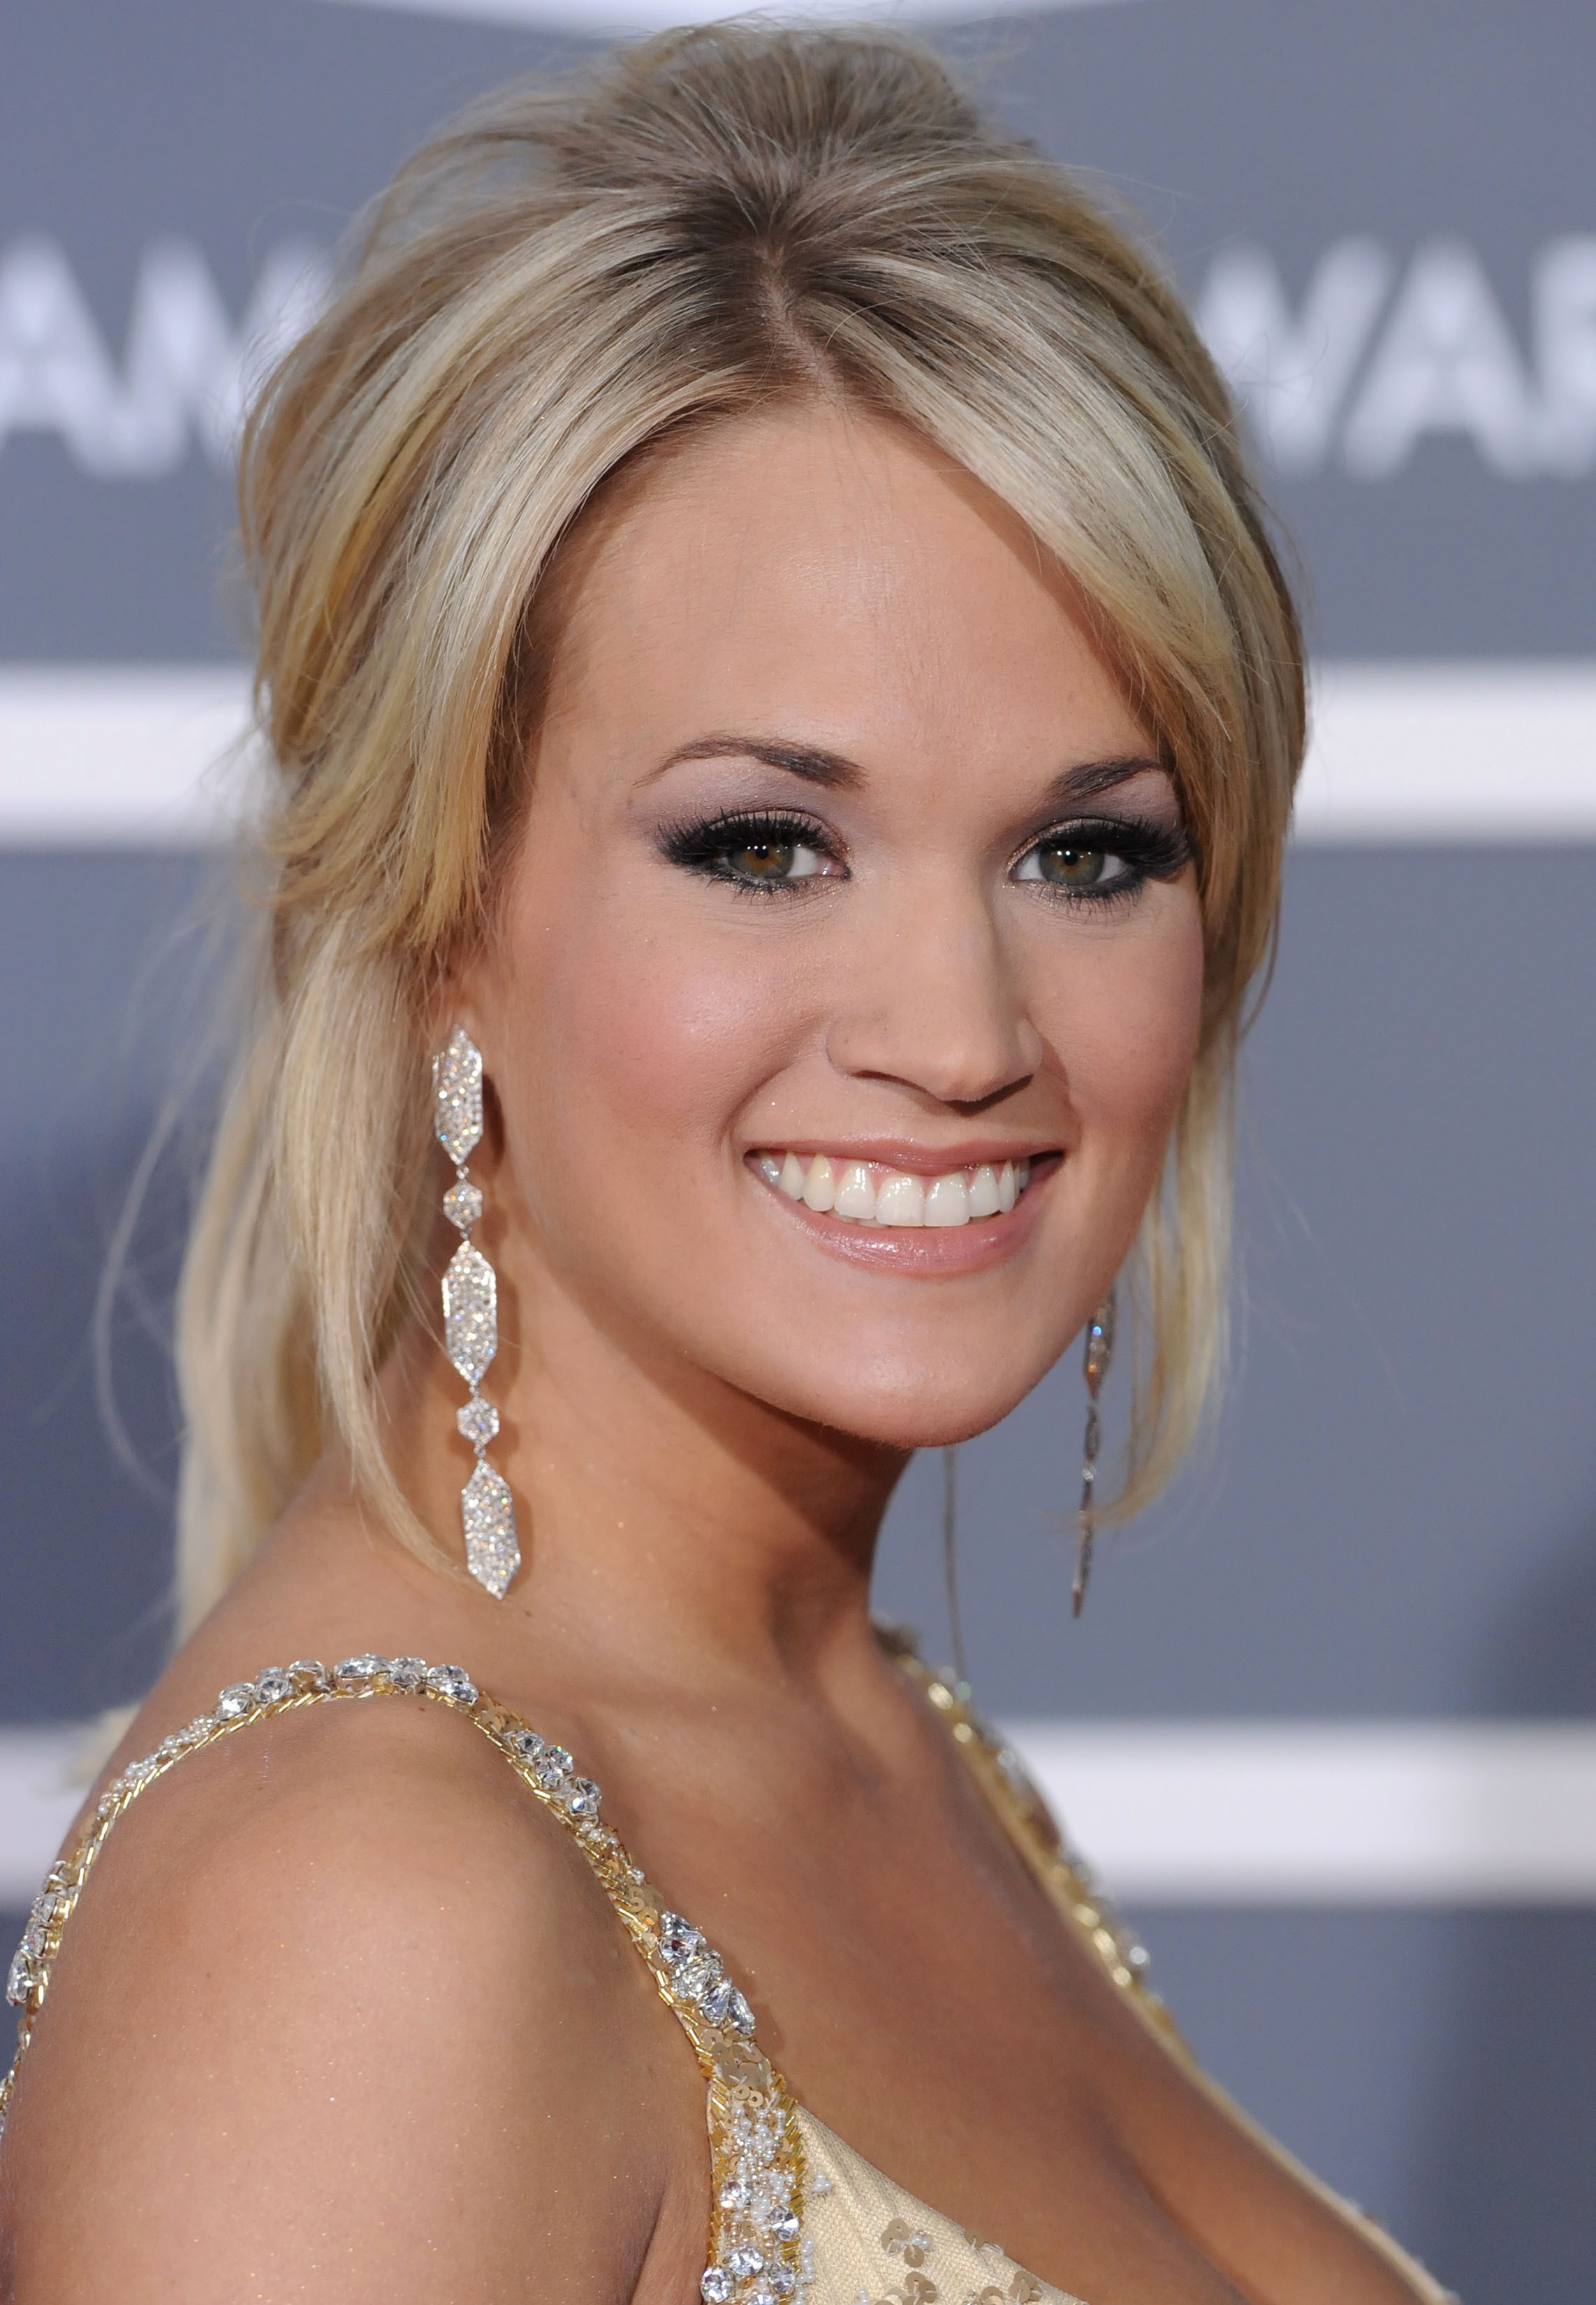 blondes, women, Carrie Underwood, faces - desktop wallpaper